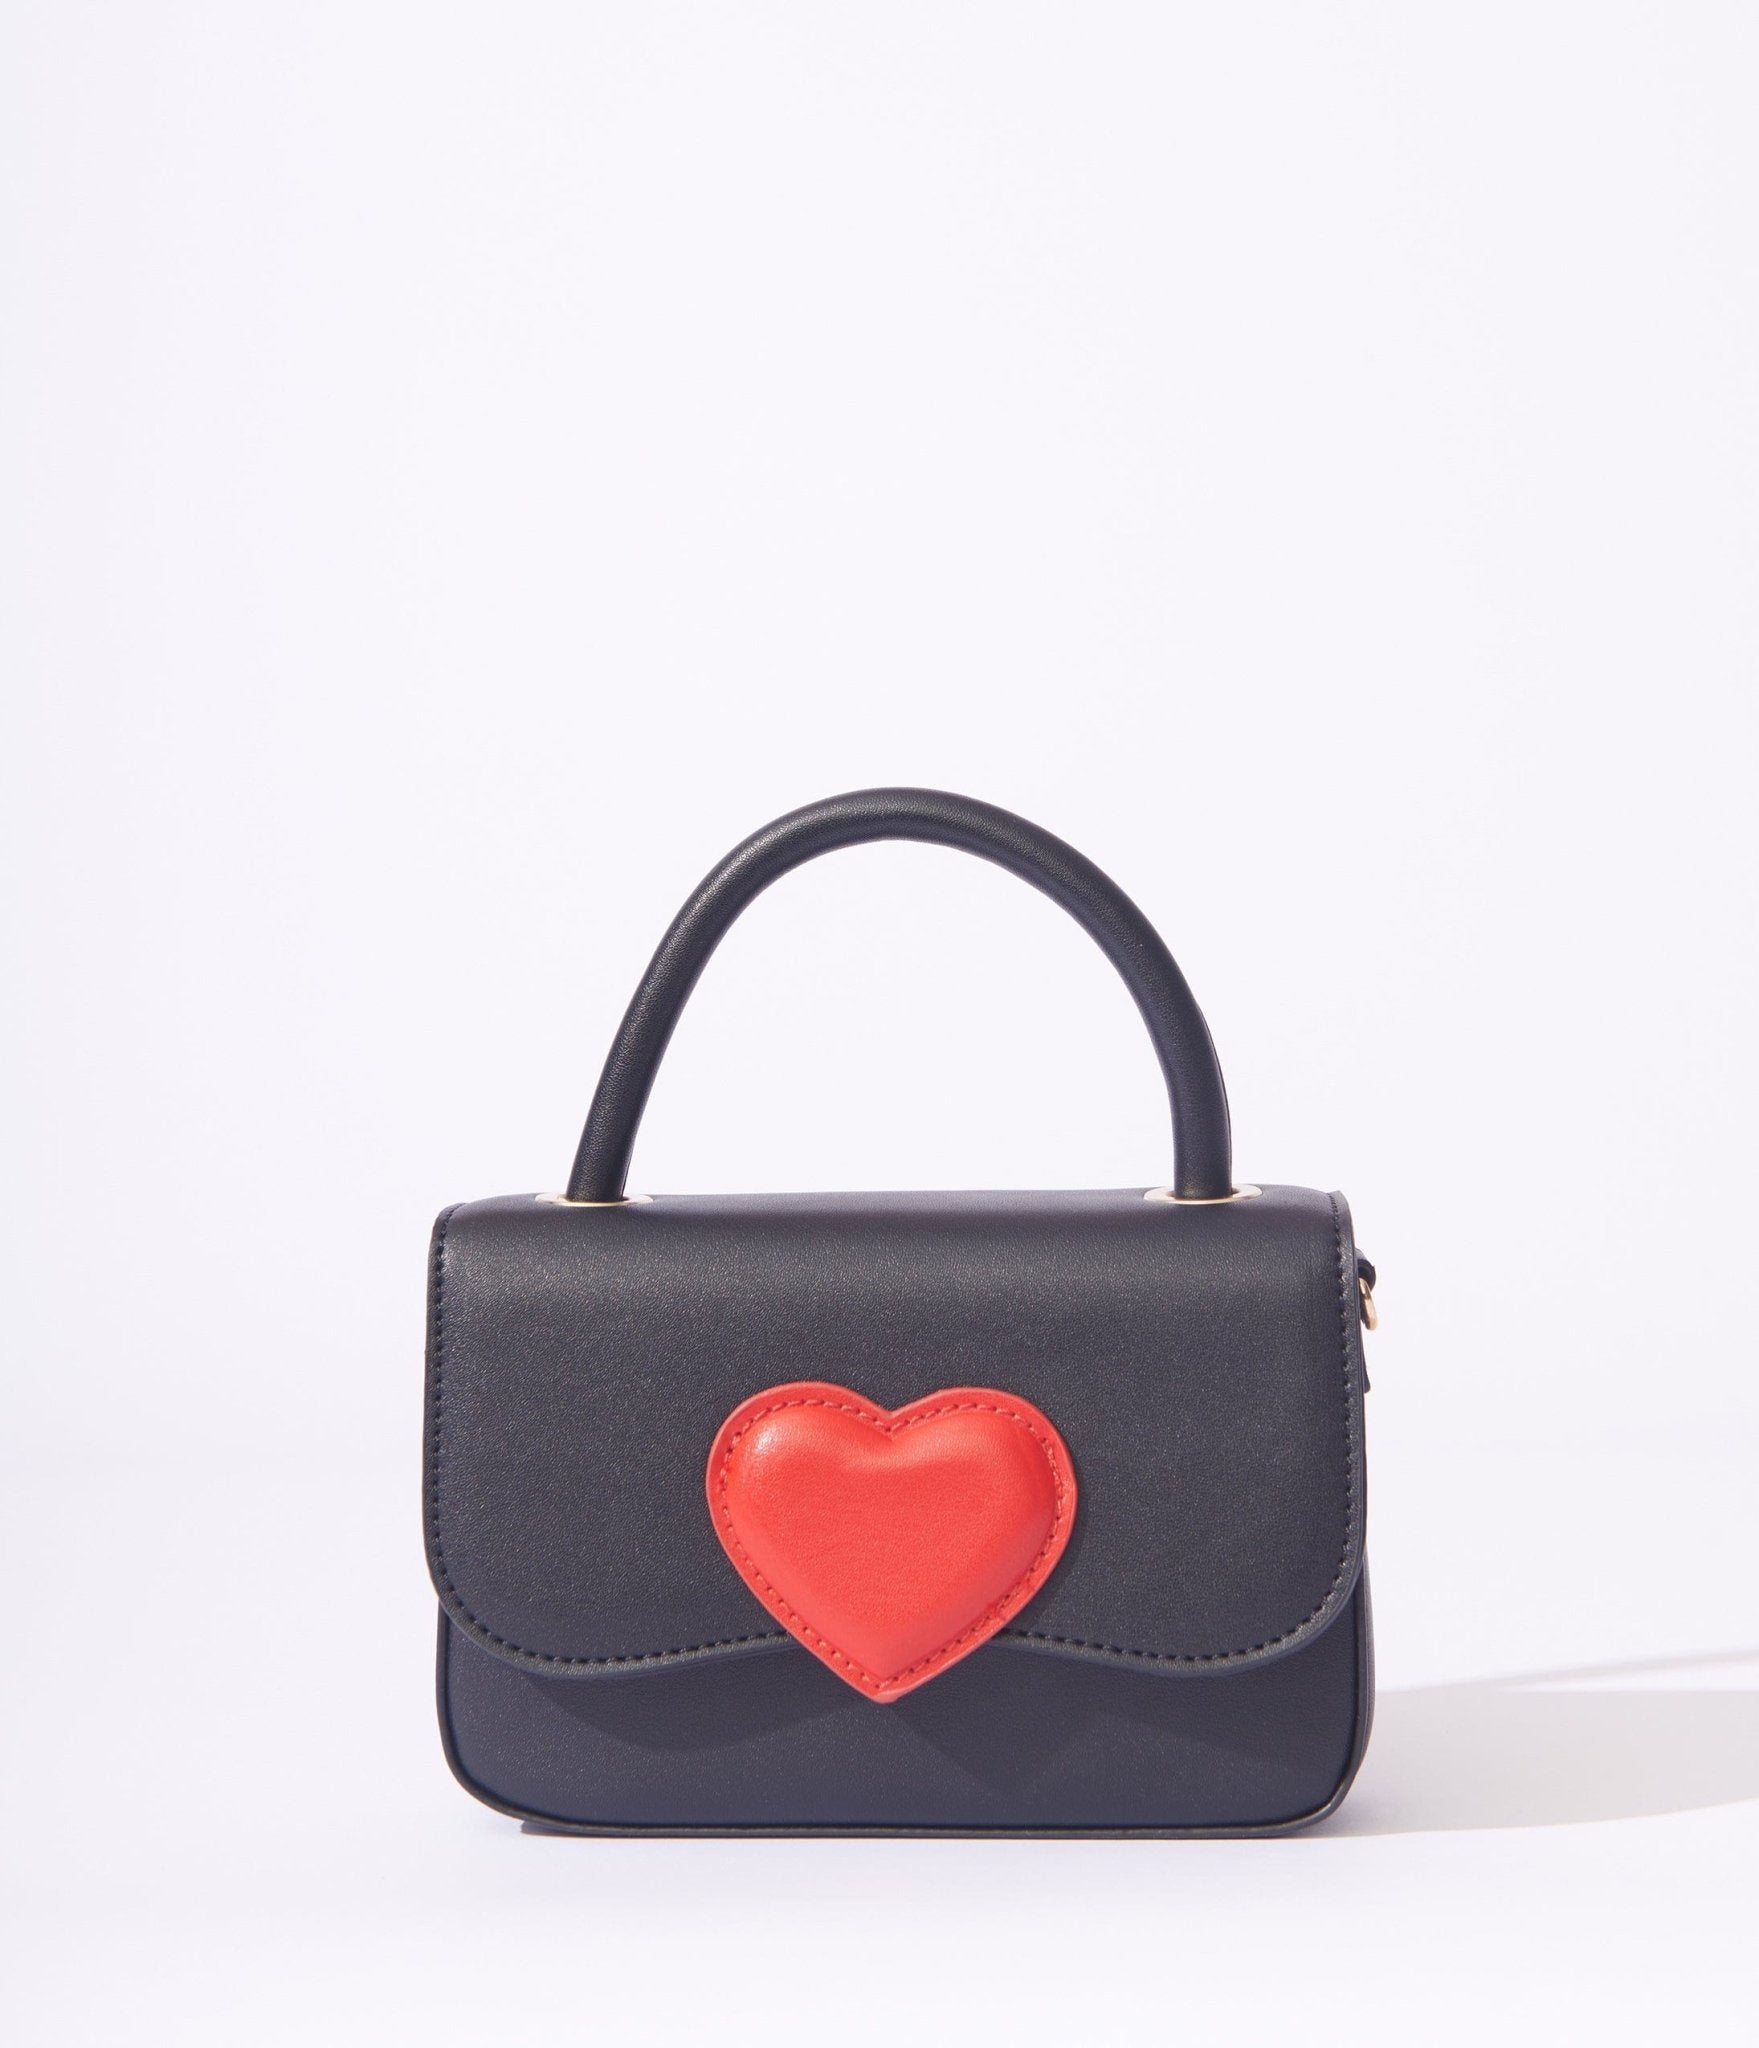 https://cdn.shopify.com/s/files/1/2714/9310/products/black-red-heart-mini-handbag-317185.jpg?v=1703093760